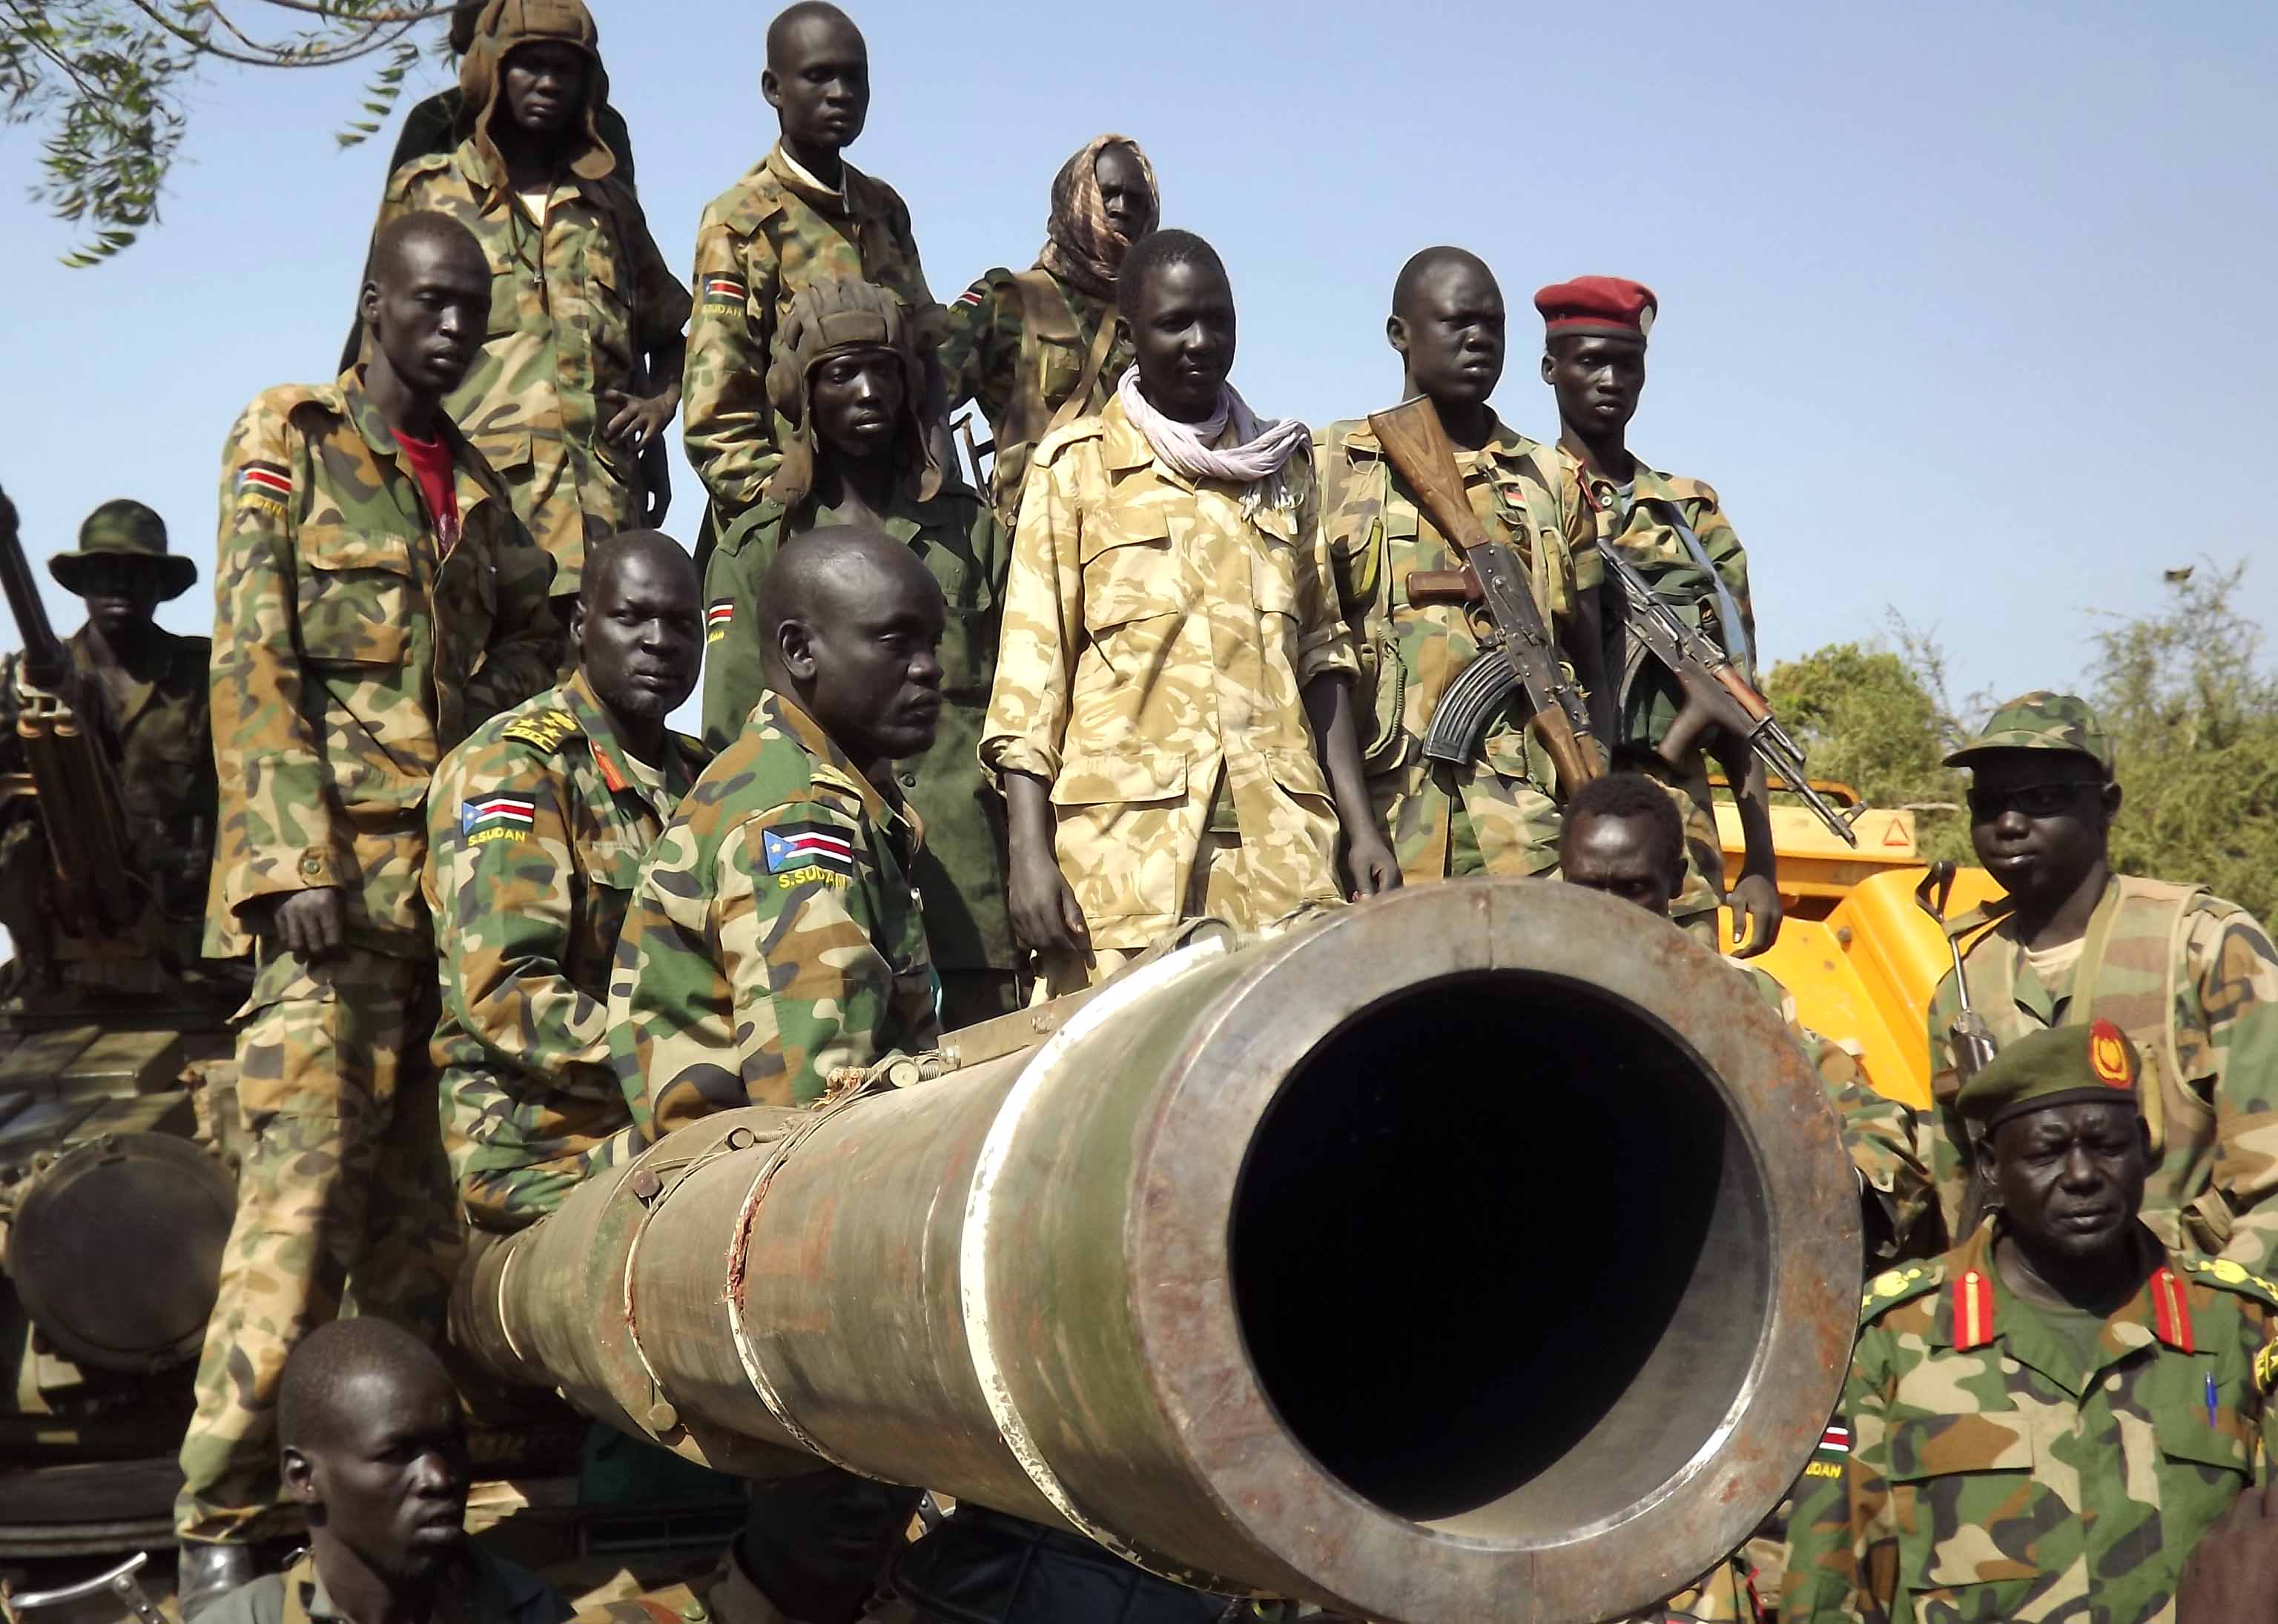   16 قتيلا فى معارك بجنوب السودان